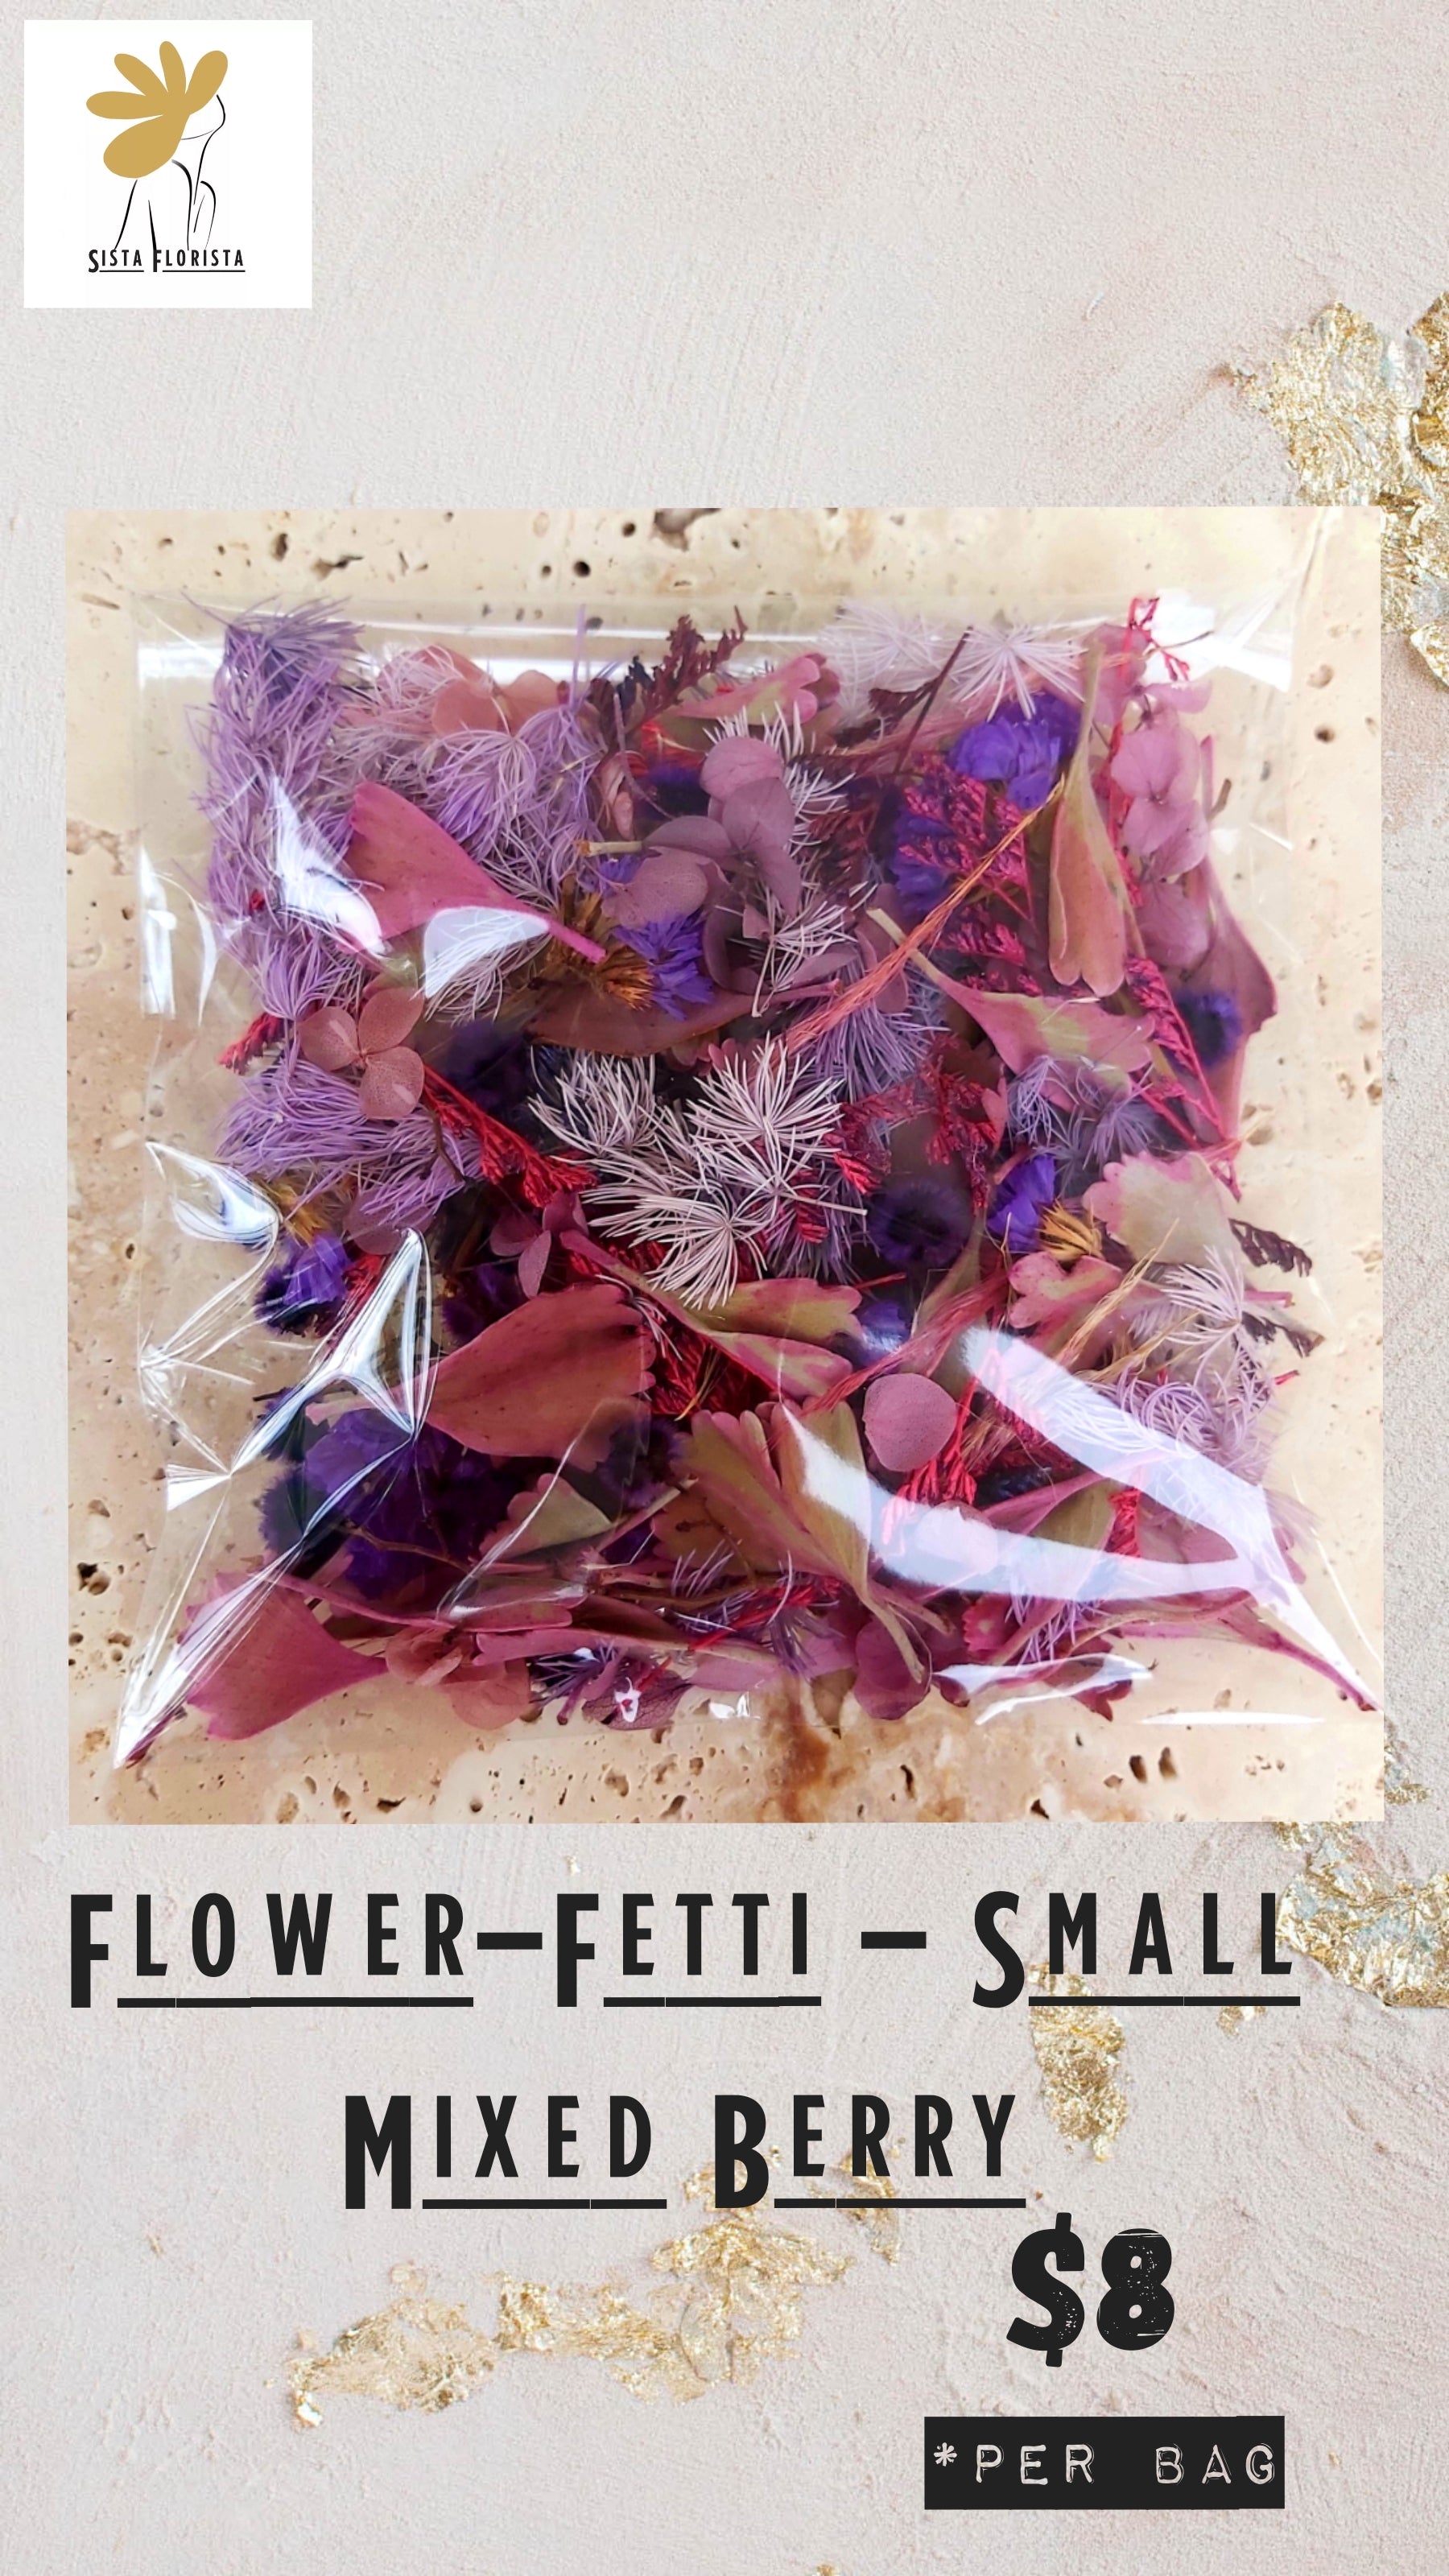 Flowerfetti: Confetti Made of Flowers